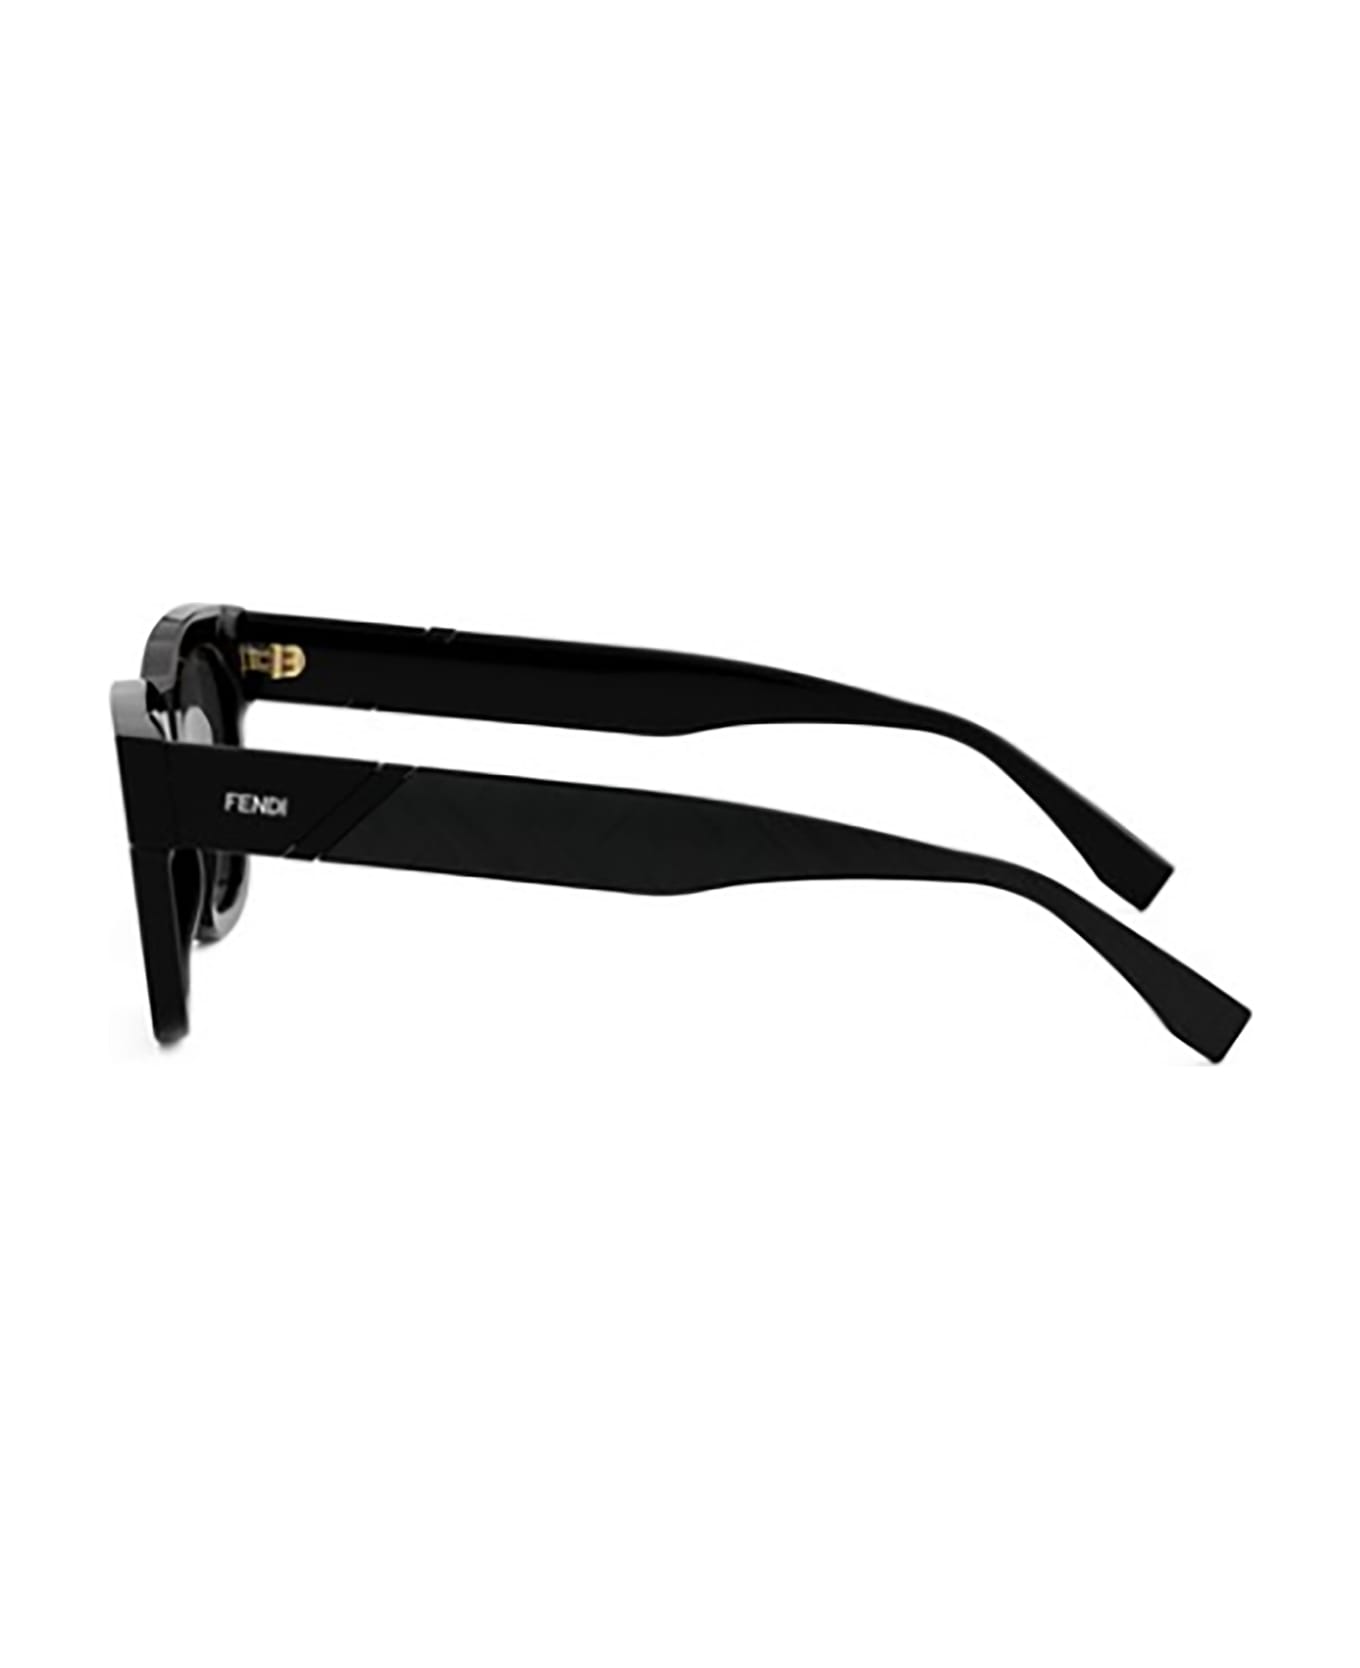 Fendi Eyewear FE40132I Sunglasses - A サングラス